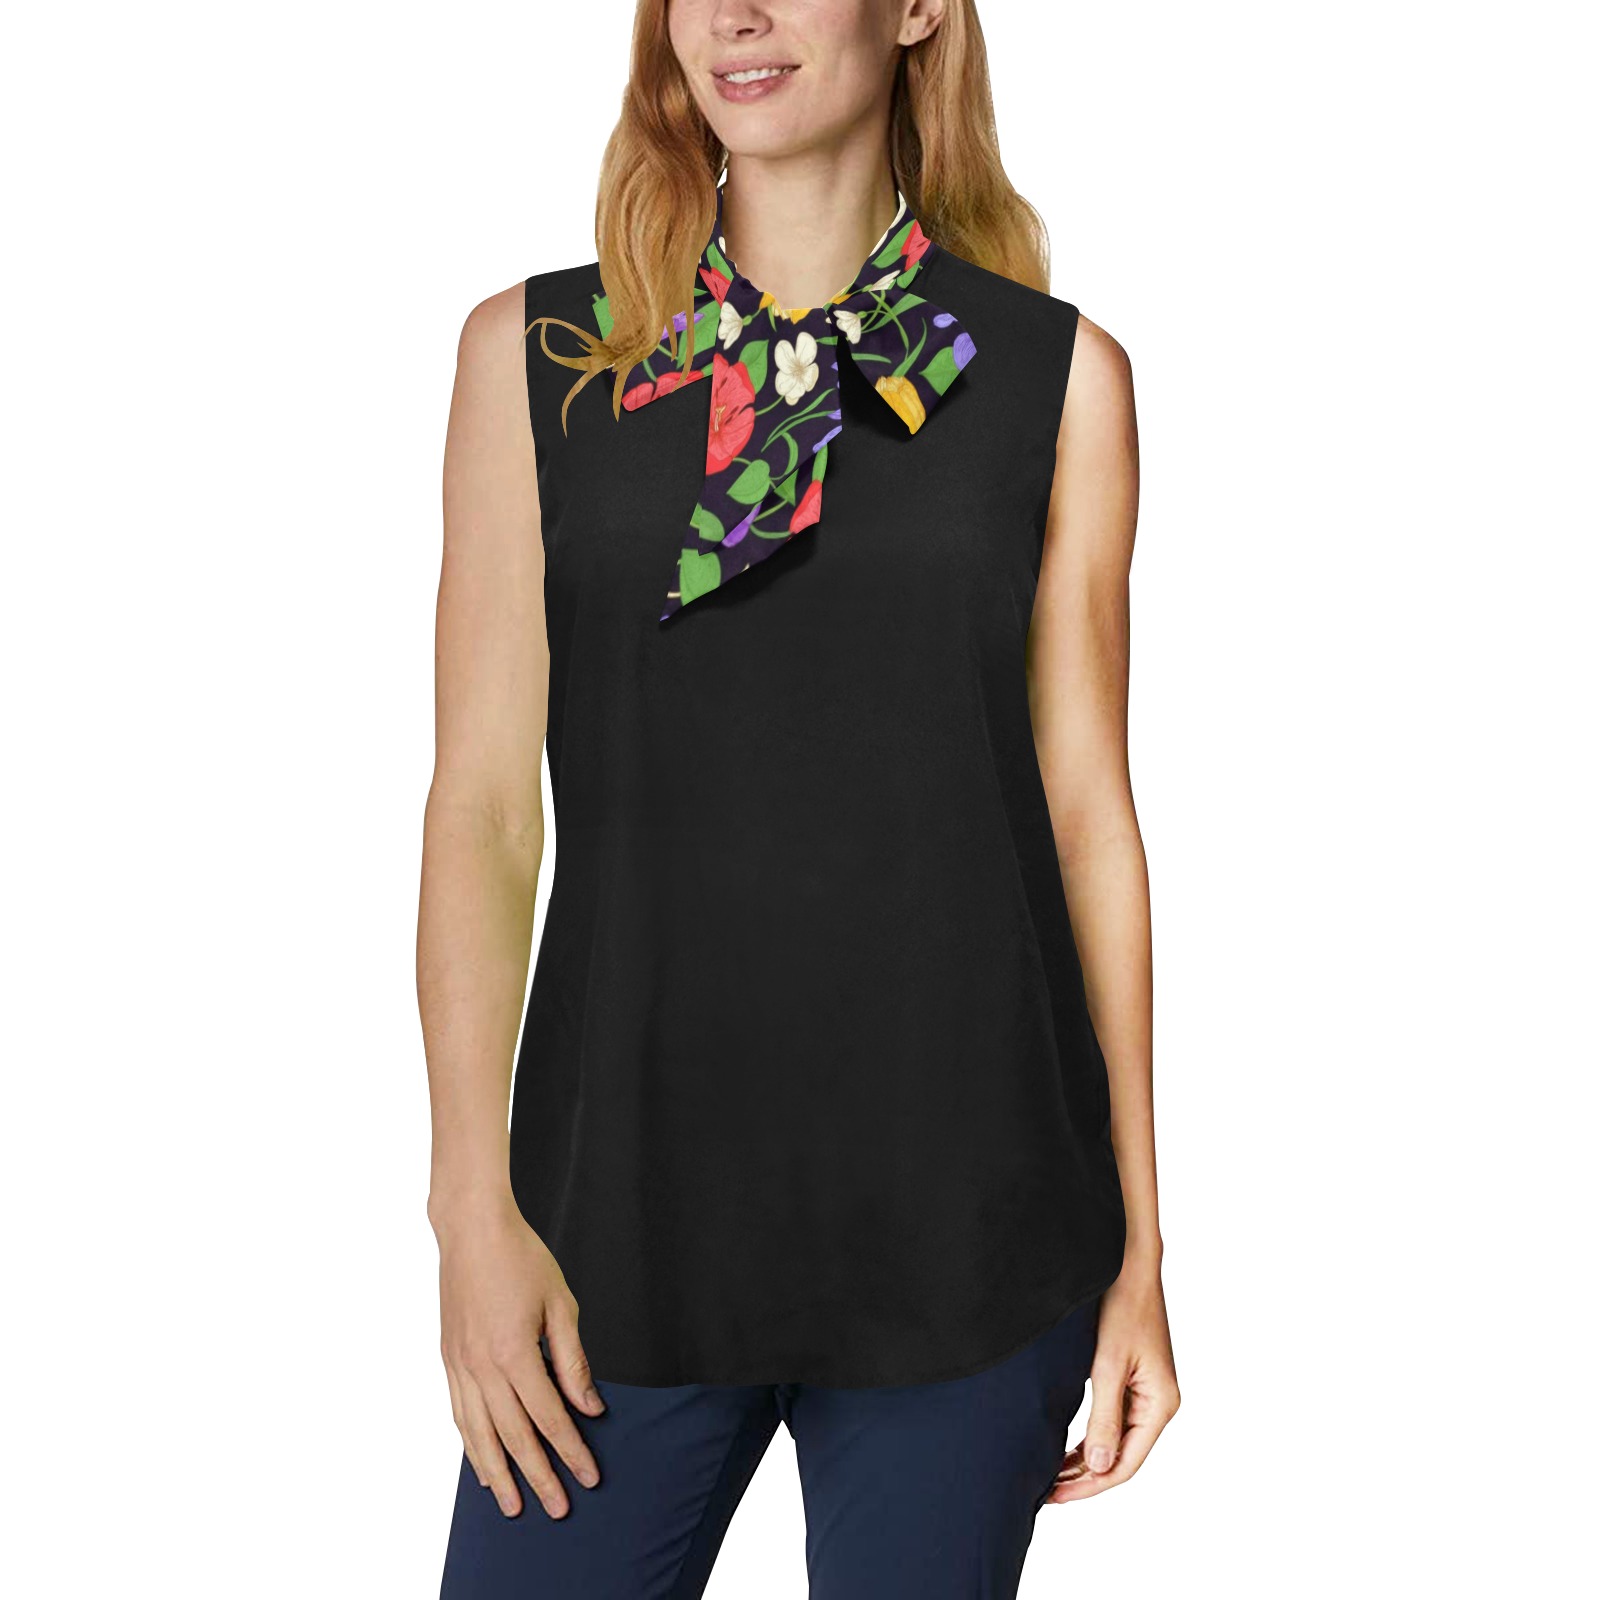 Multicolor Romantic Blooms Print Women's Bow Tie V-Neck Sleeveless Shirt (Model T69)